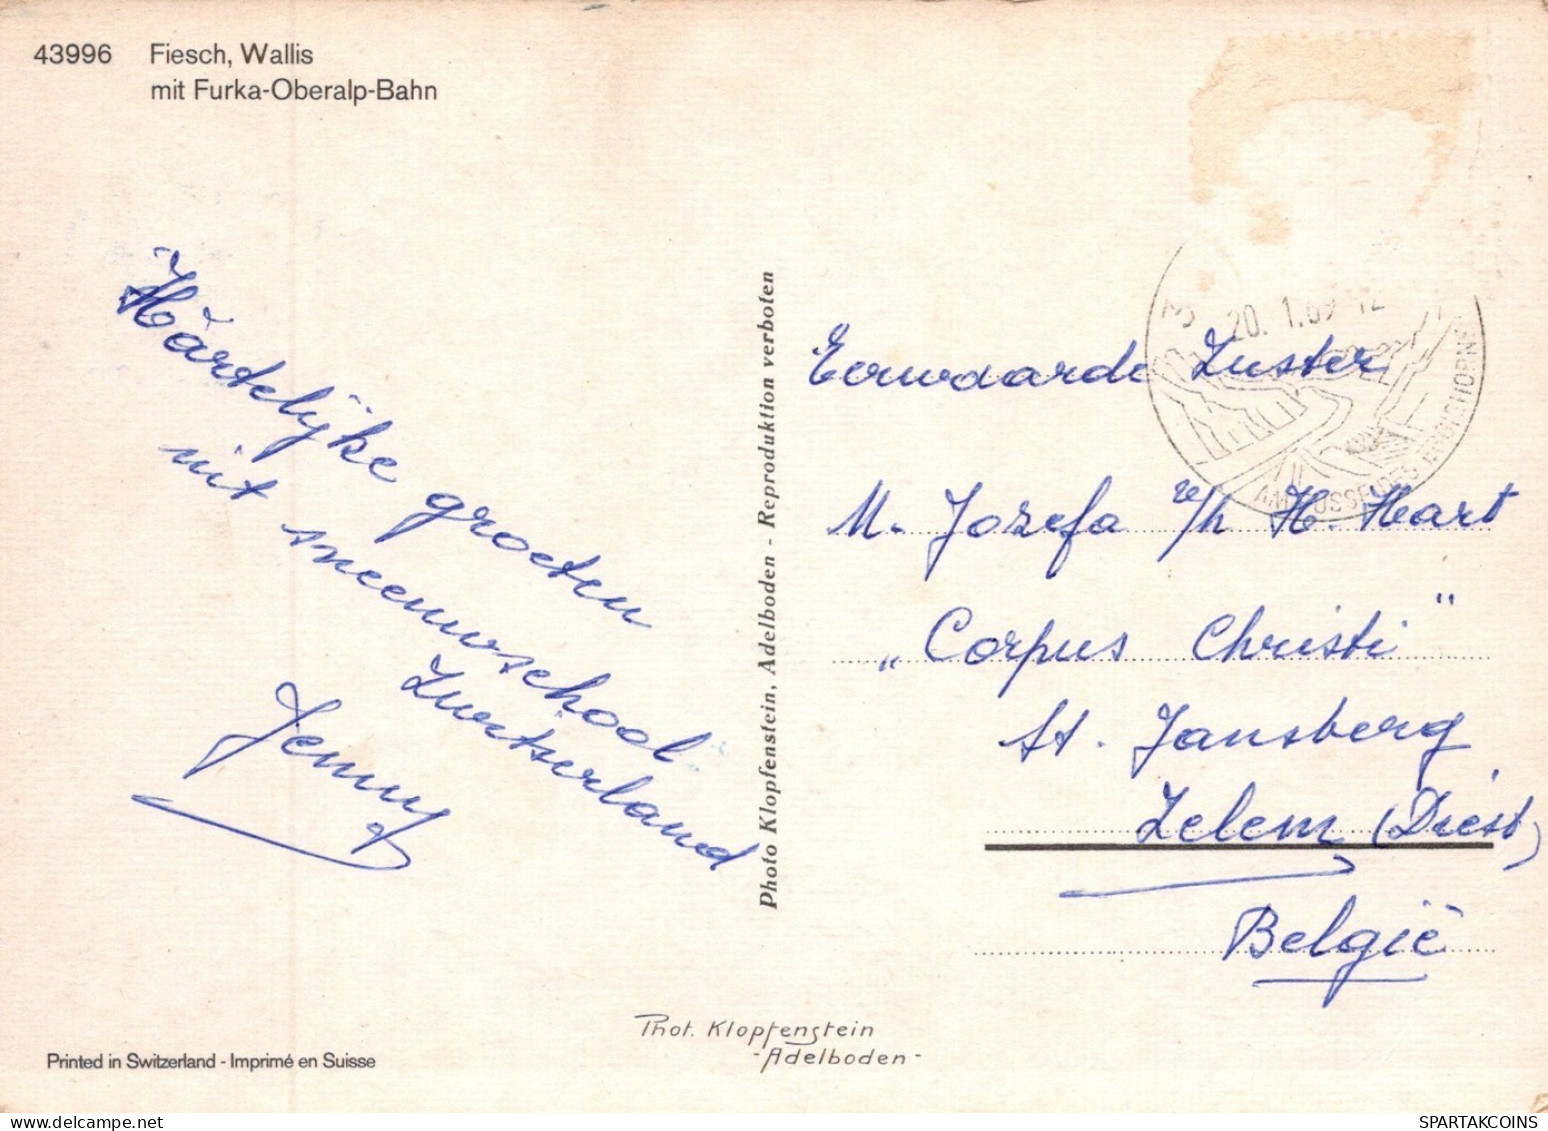 TREN TRANSPORTE Ferroviario Vintage Tarjeta Postal CPSM #PAA934.A - Trains